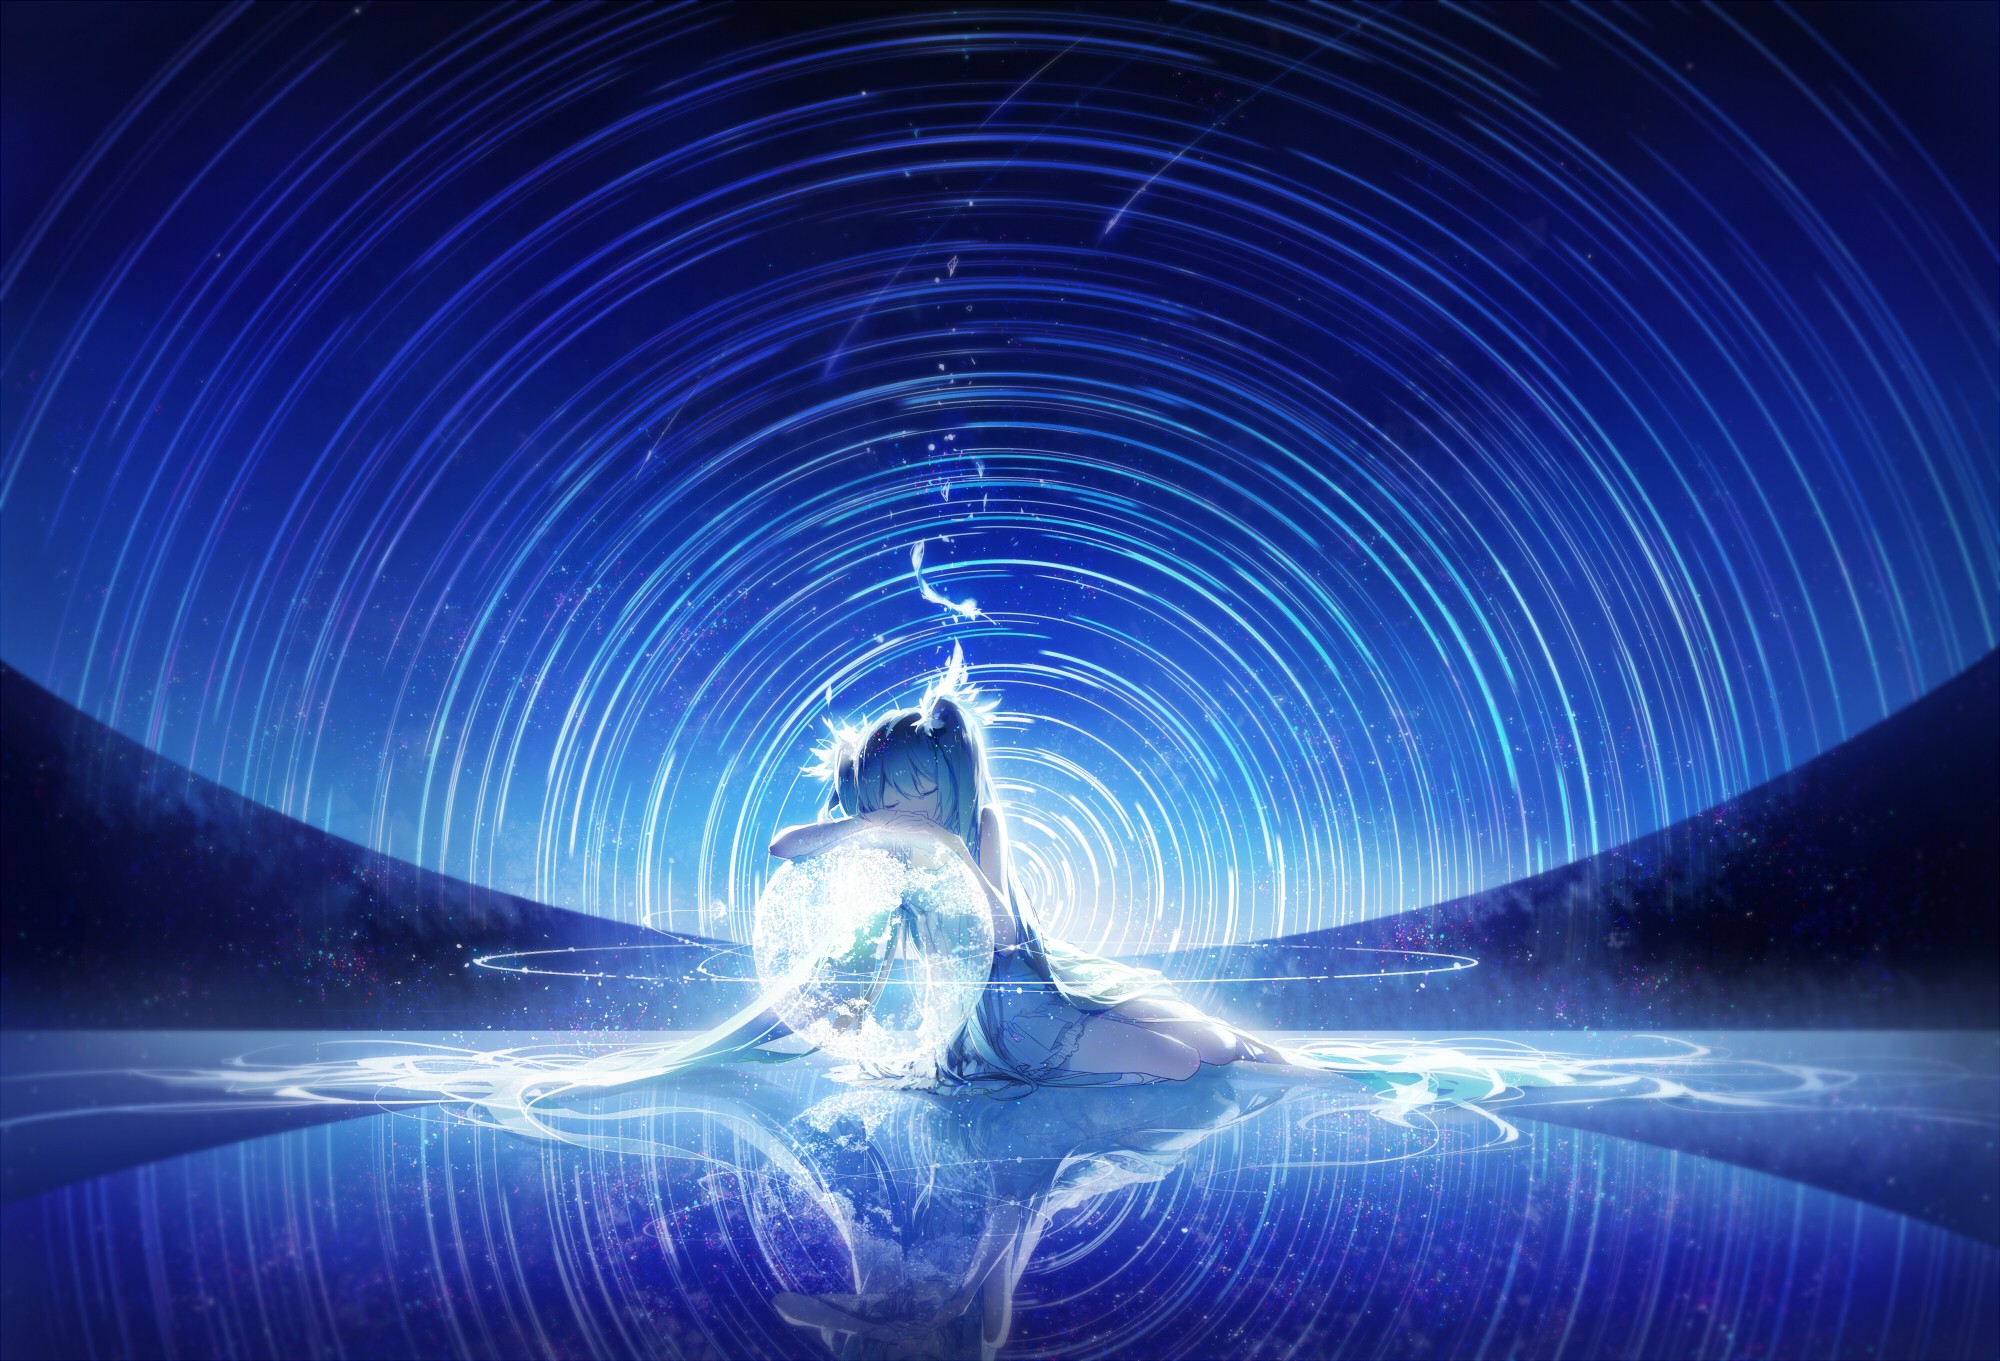 Anime 2000x1361 anime anime girls artwork Hatsune Miku Vocaloid rella sky reflection fantasy art fantasy girl